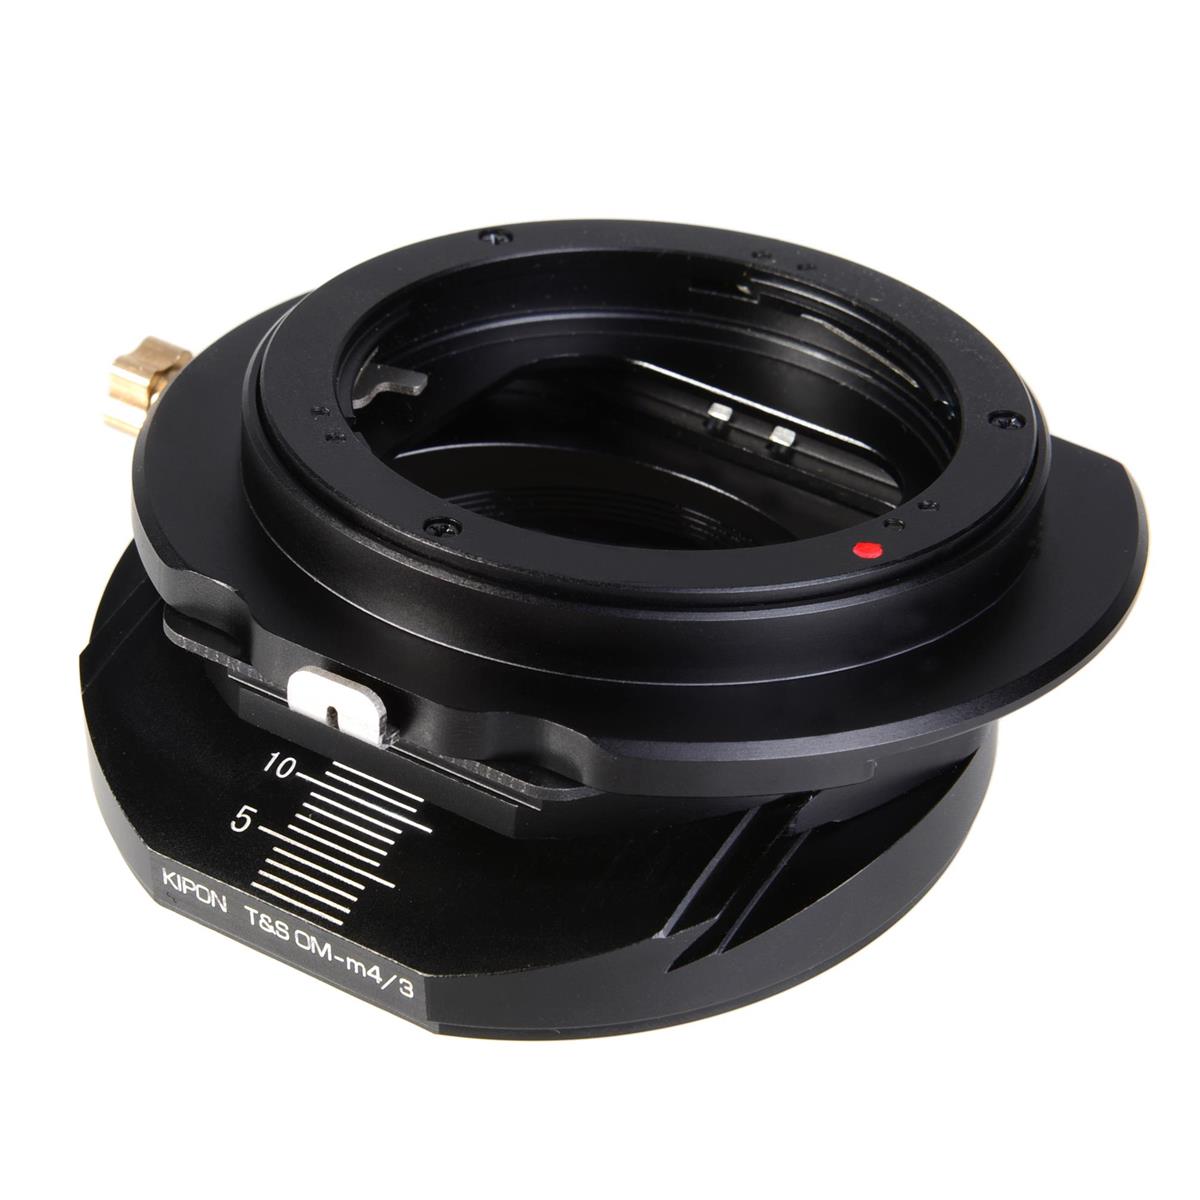 

Kipon Tilt-Shift Lens Mount Adapter from Olympus to M4/3 Body